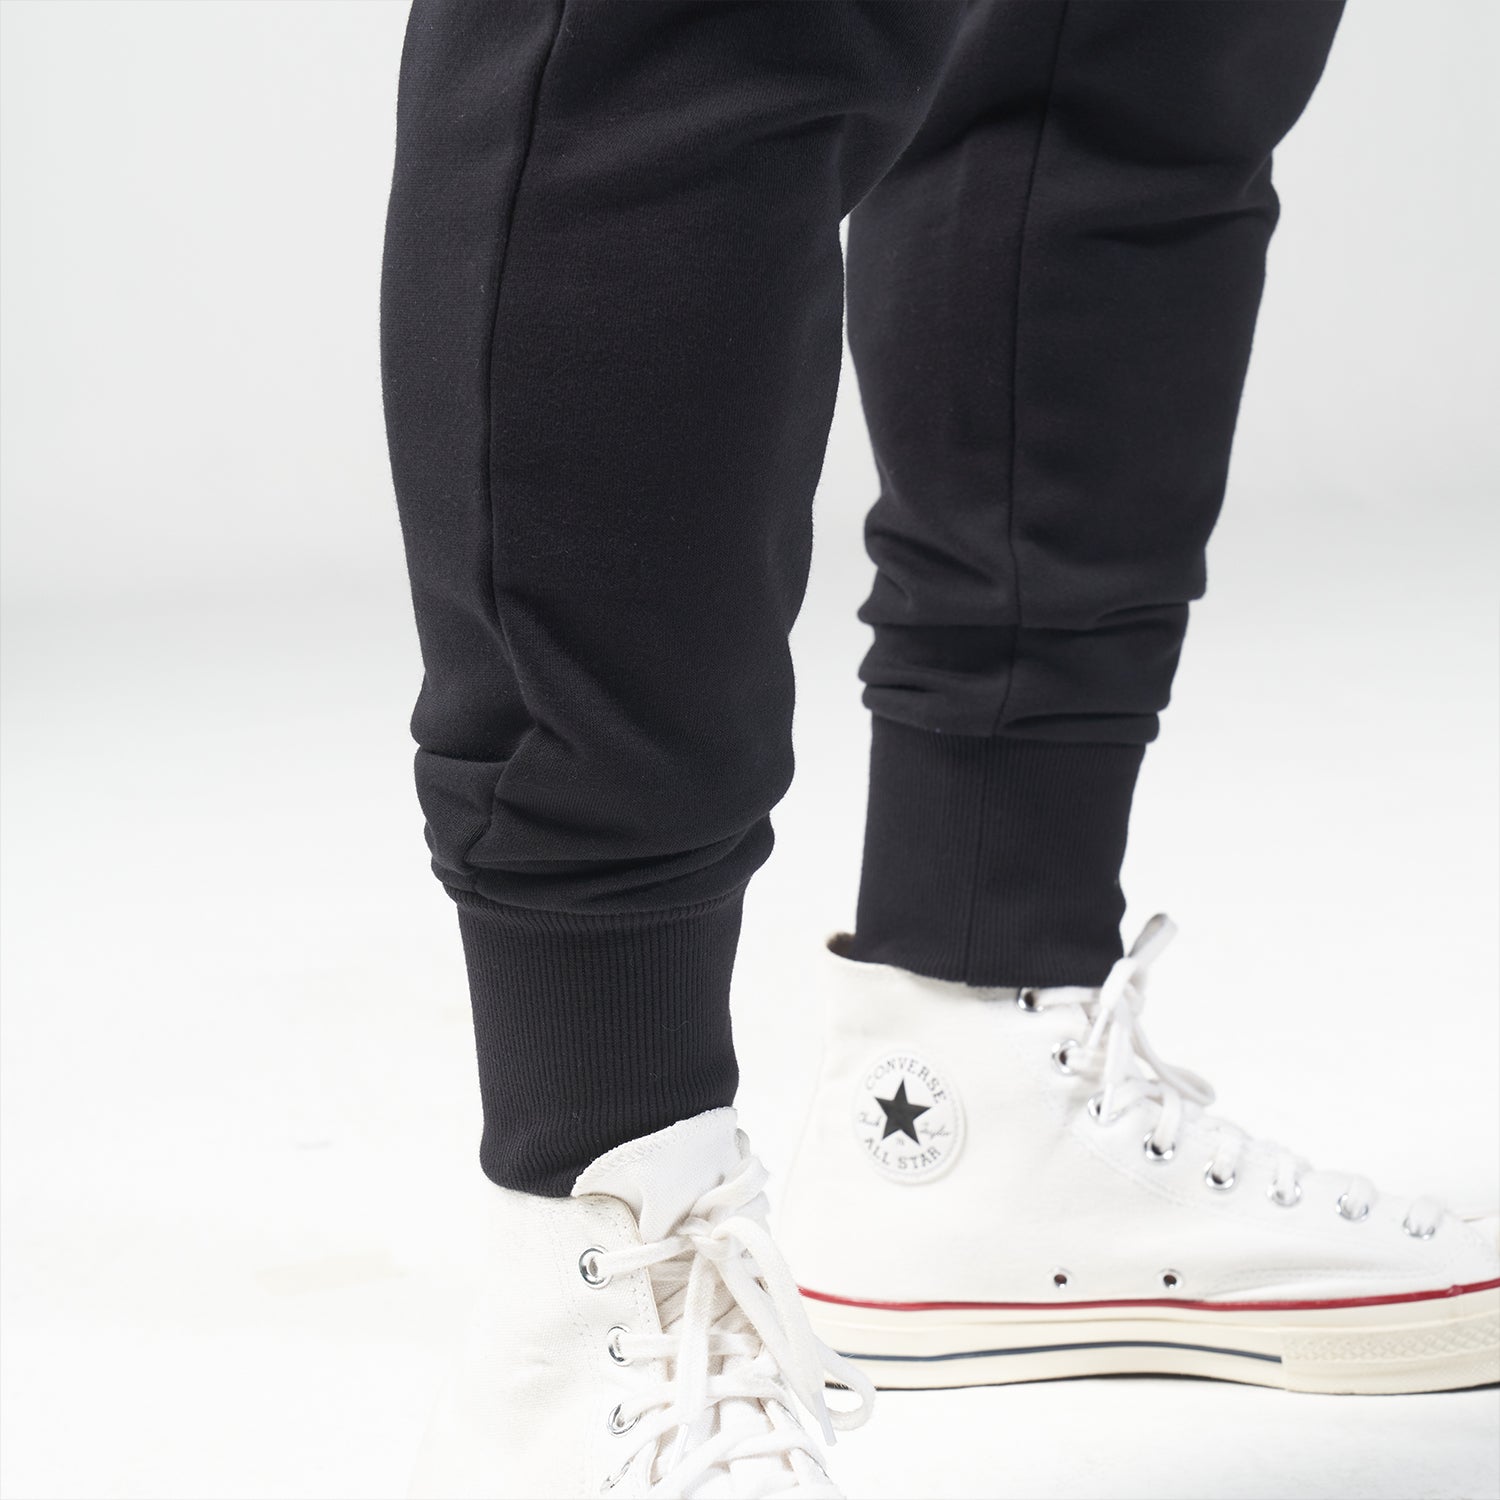 Calças Masculinas de Luxo - Jeans, Jogger, Cargo e Social